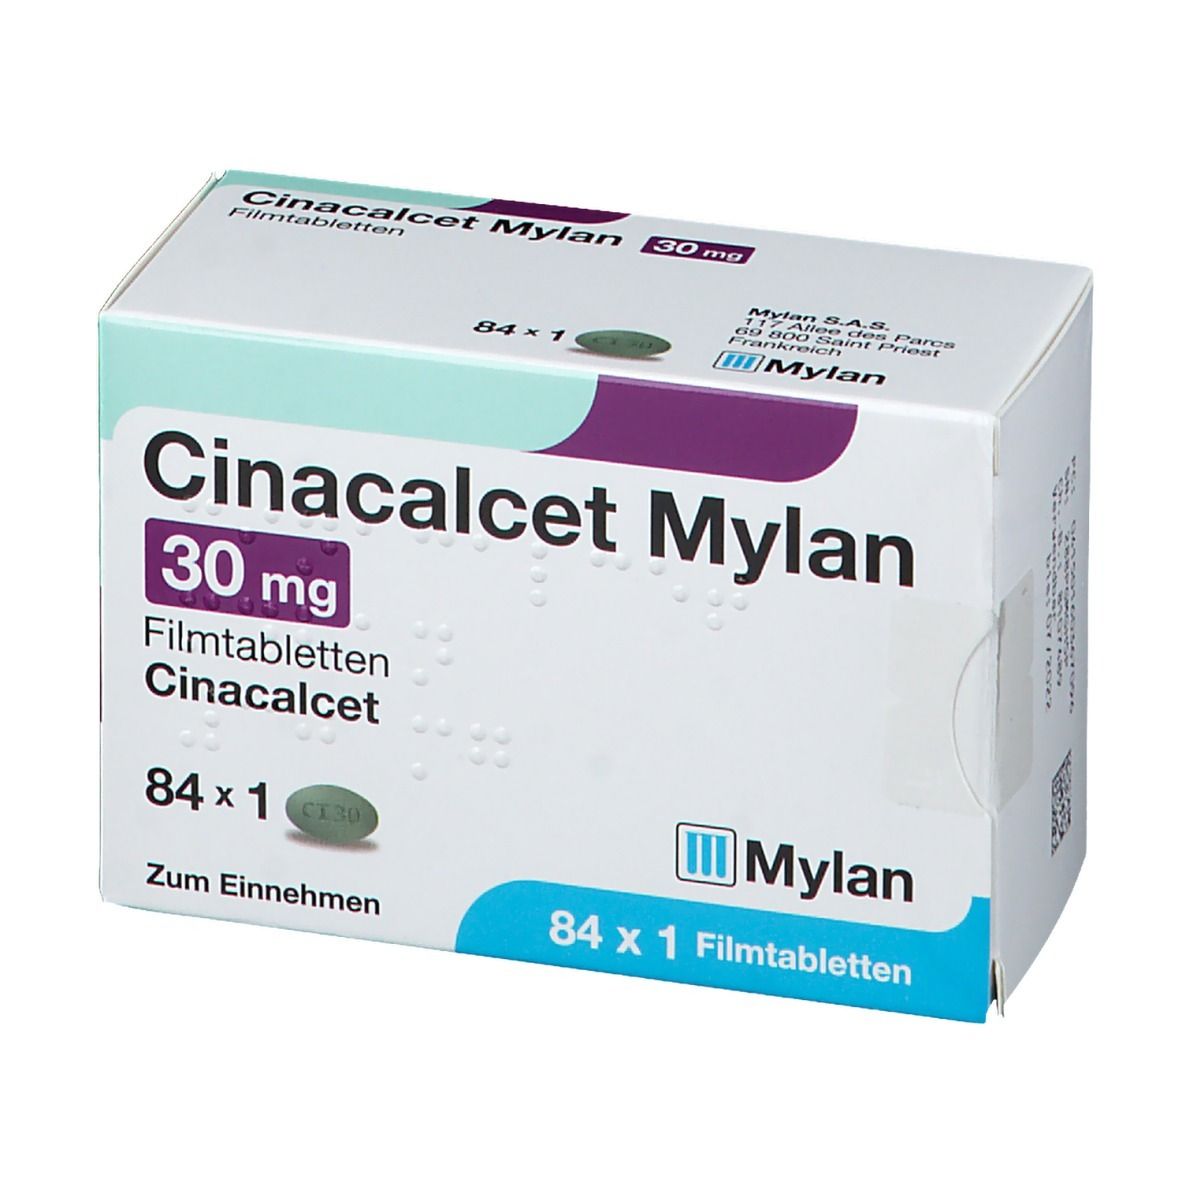 Cinacalcet Mylan 30 mg